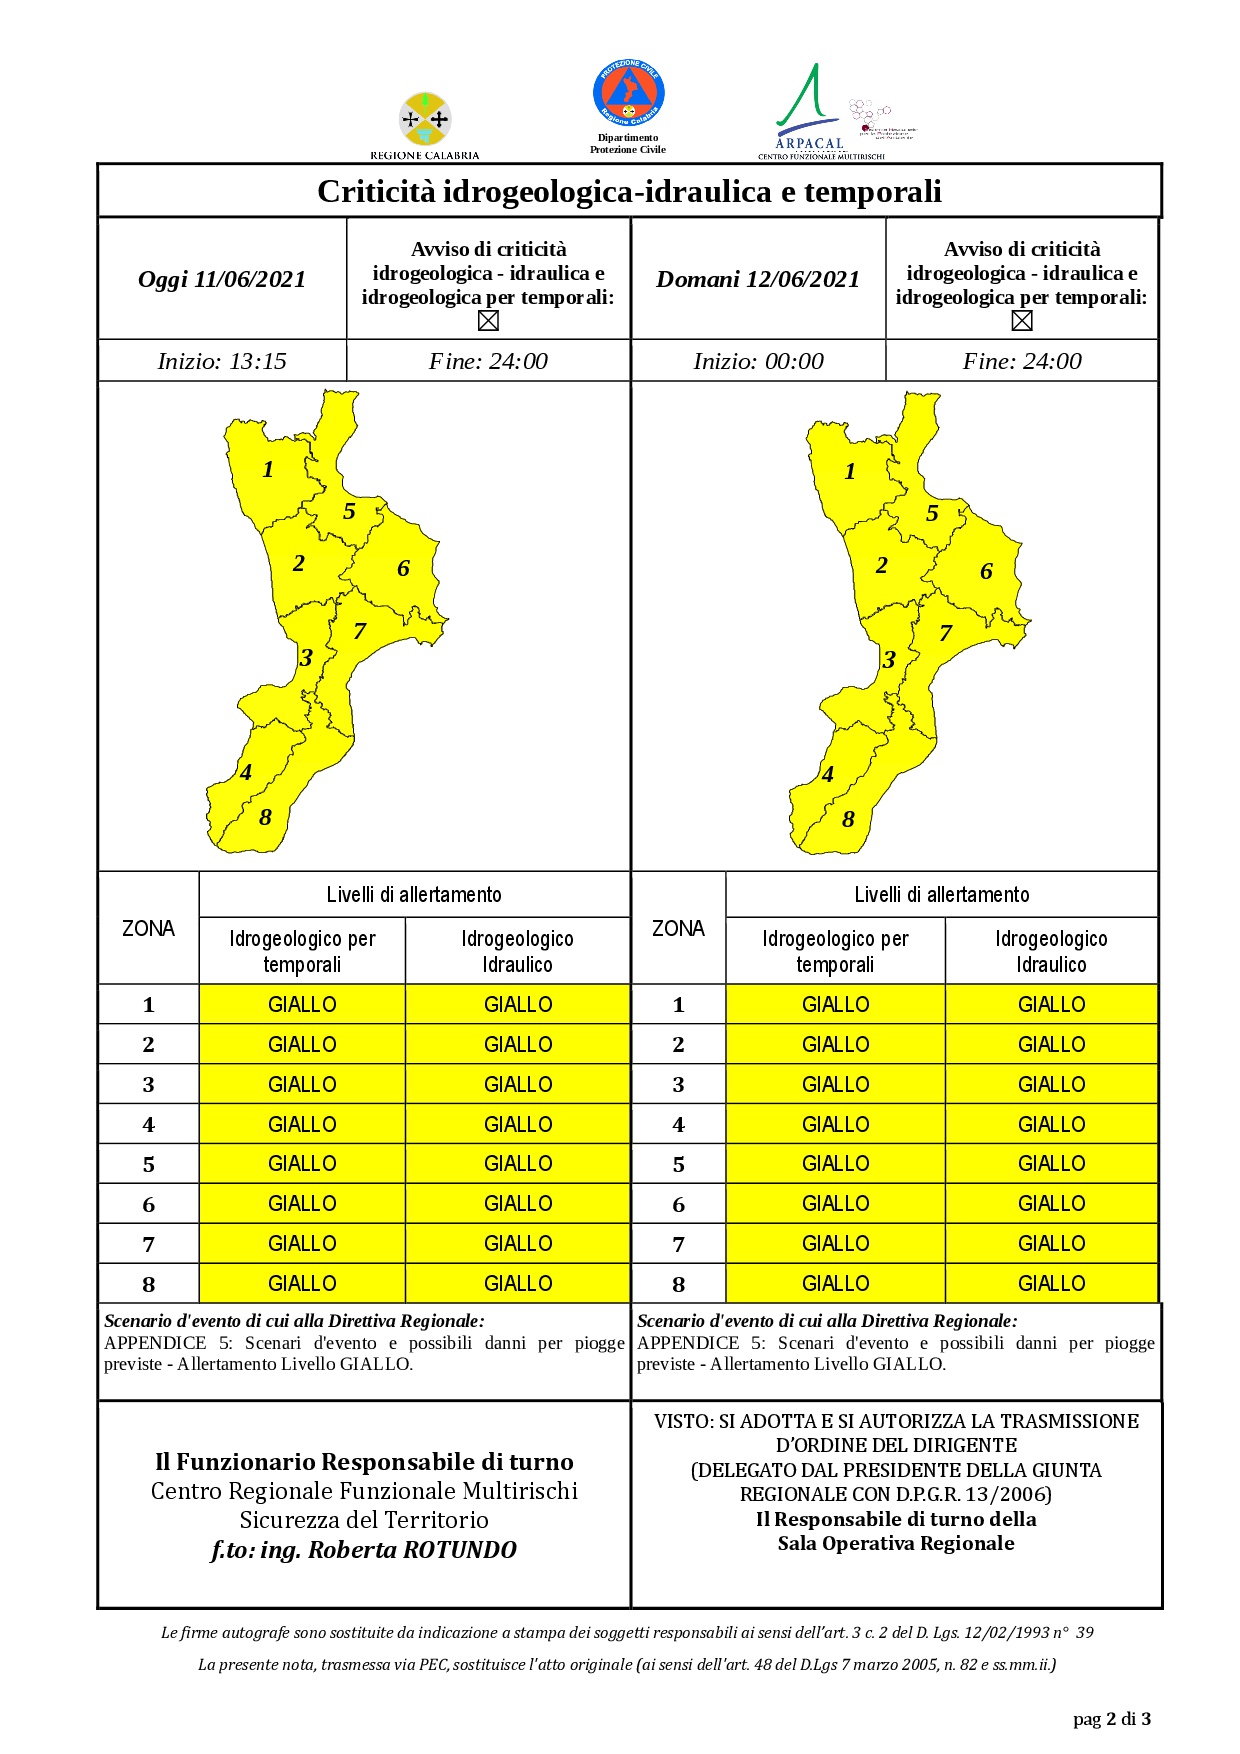 Criticità idrogeologica-idraulica e temporali in Calabria 11-06-2021